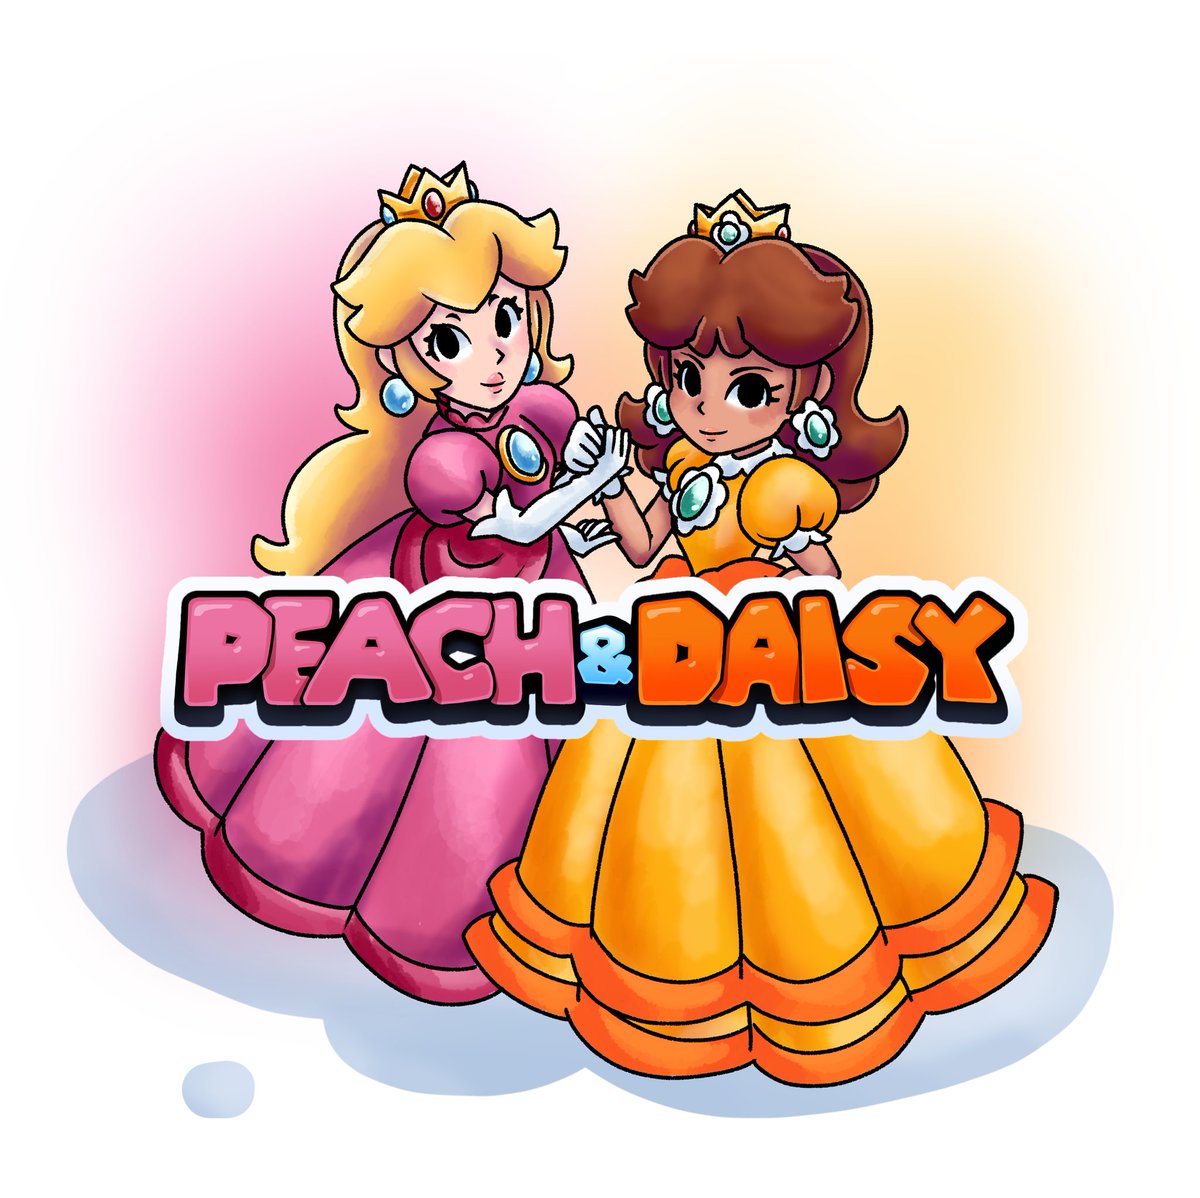 Peach & Daisy

#SuperMario #MarioBros #PrincessDaisy #PrincessPeach #fanart #Marioandluigi